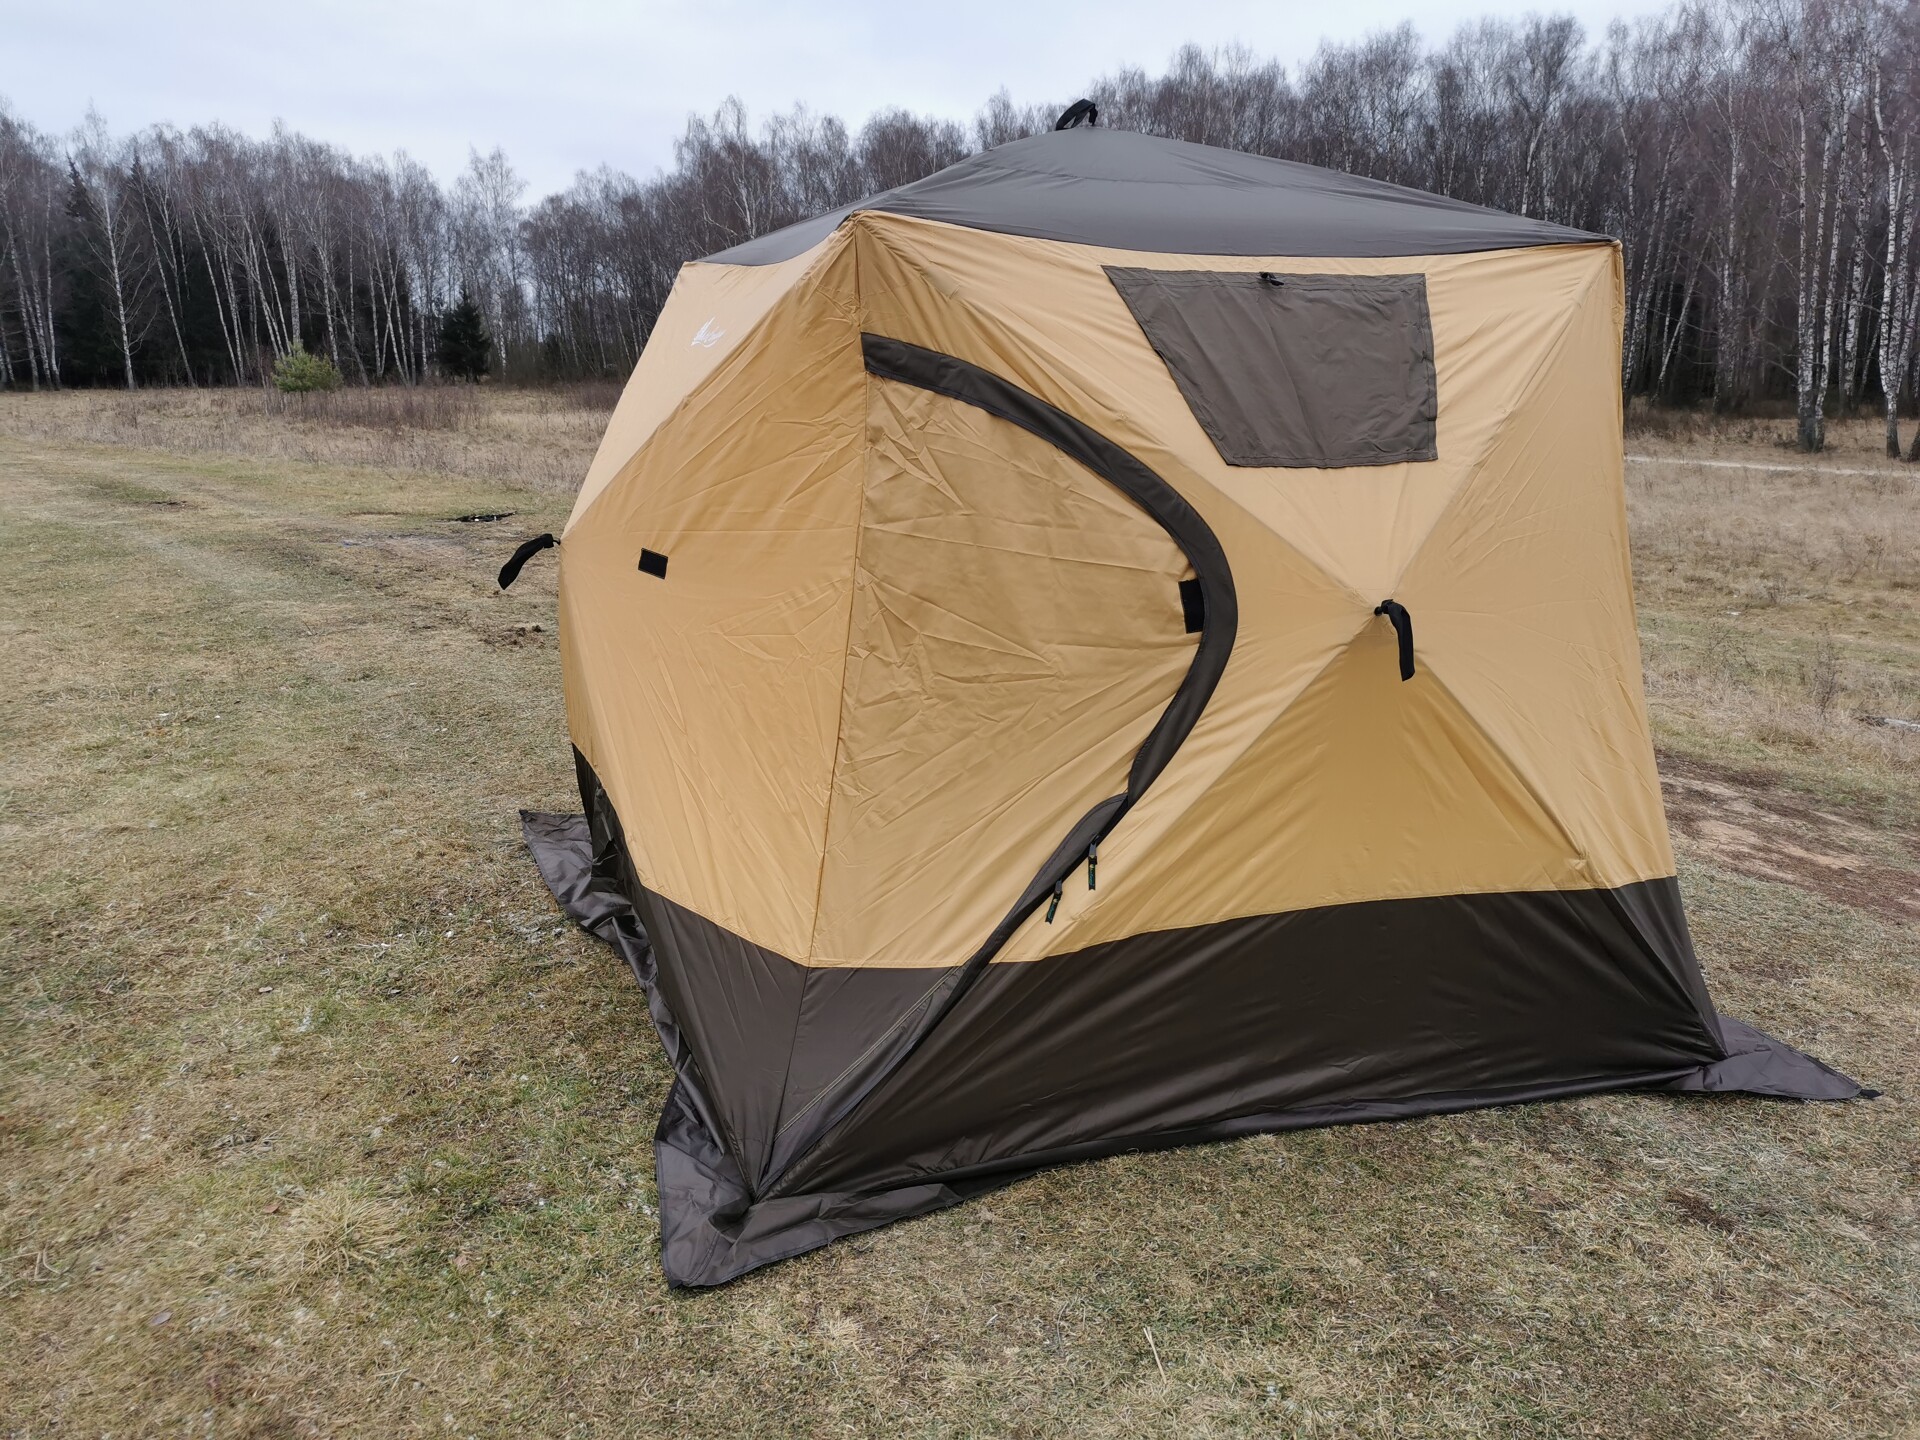 зимняя палатка +для ночевки Terbo